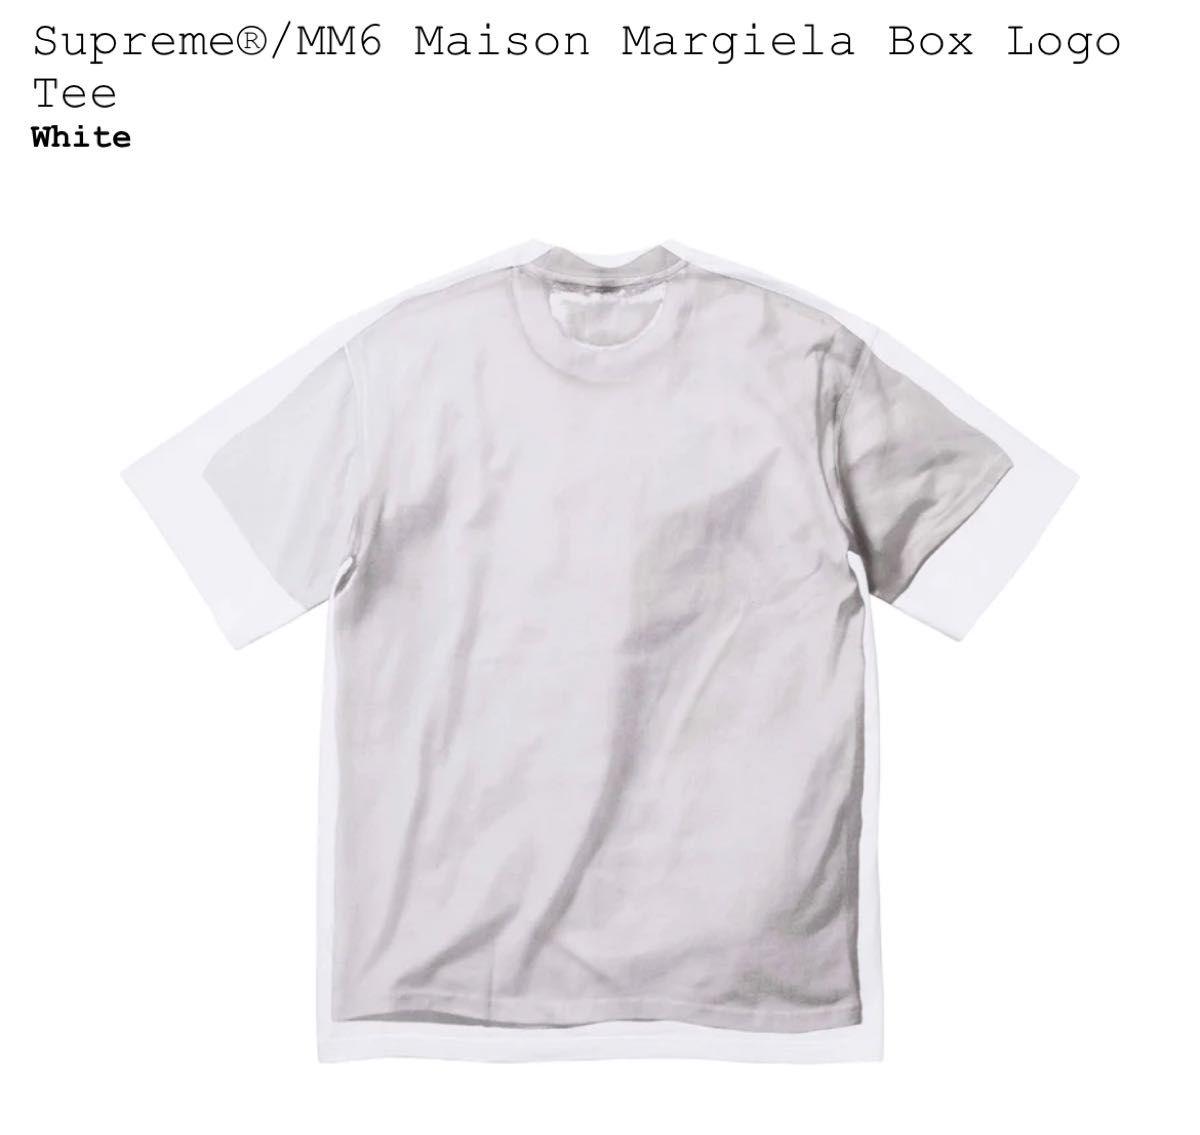 Supreme MM6 Maison Margiela Box Logo Tee シュプリーム ボックスロゴ